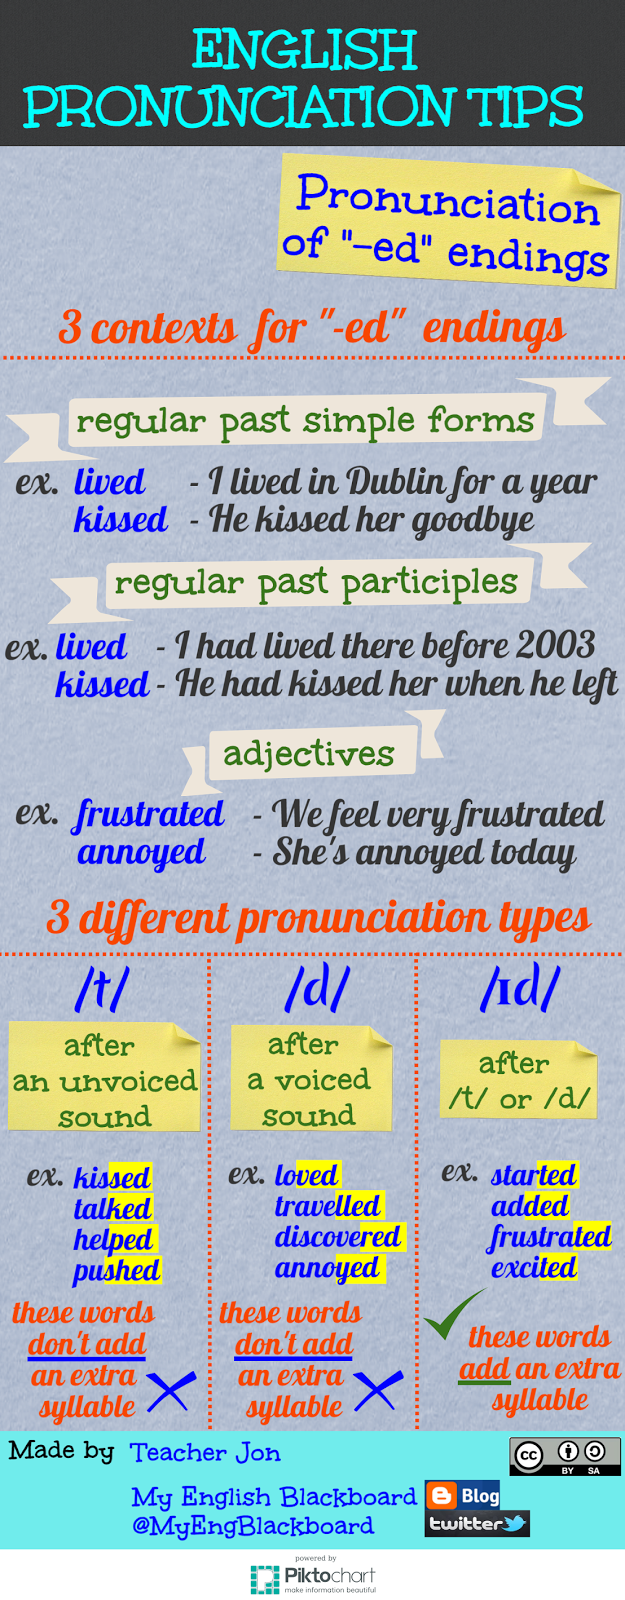 my-english-blackboard-english-pronunciation-tips-pronunciation-of-ed-endings